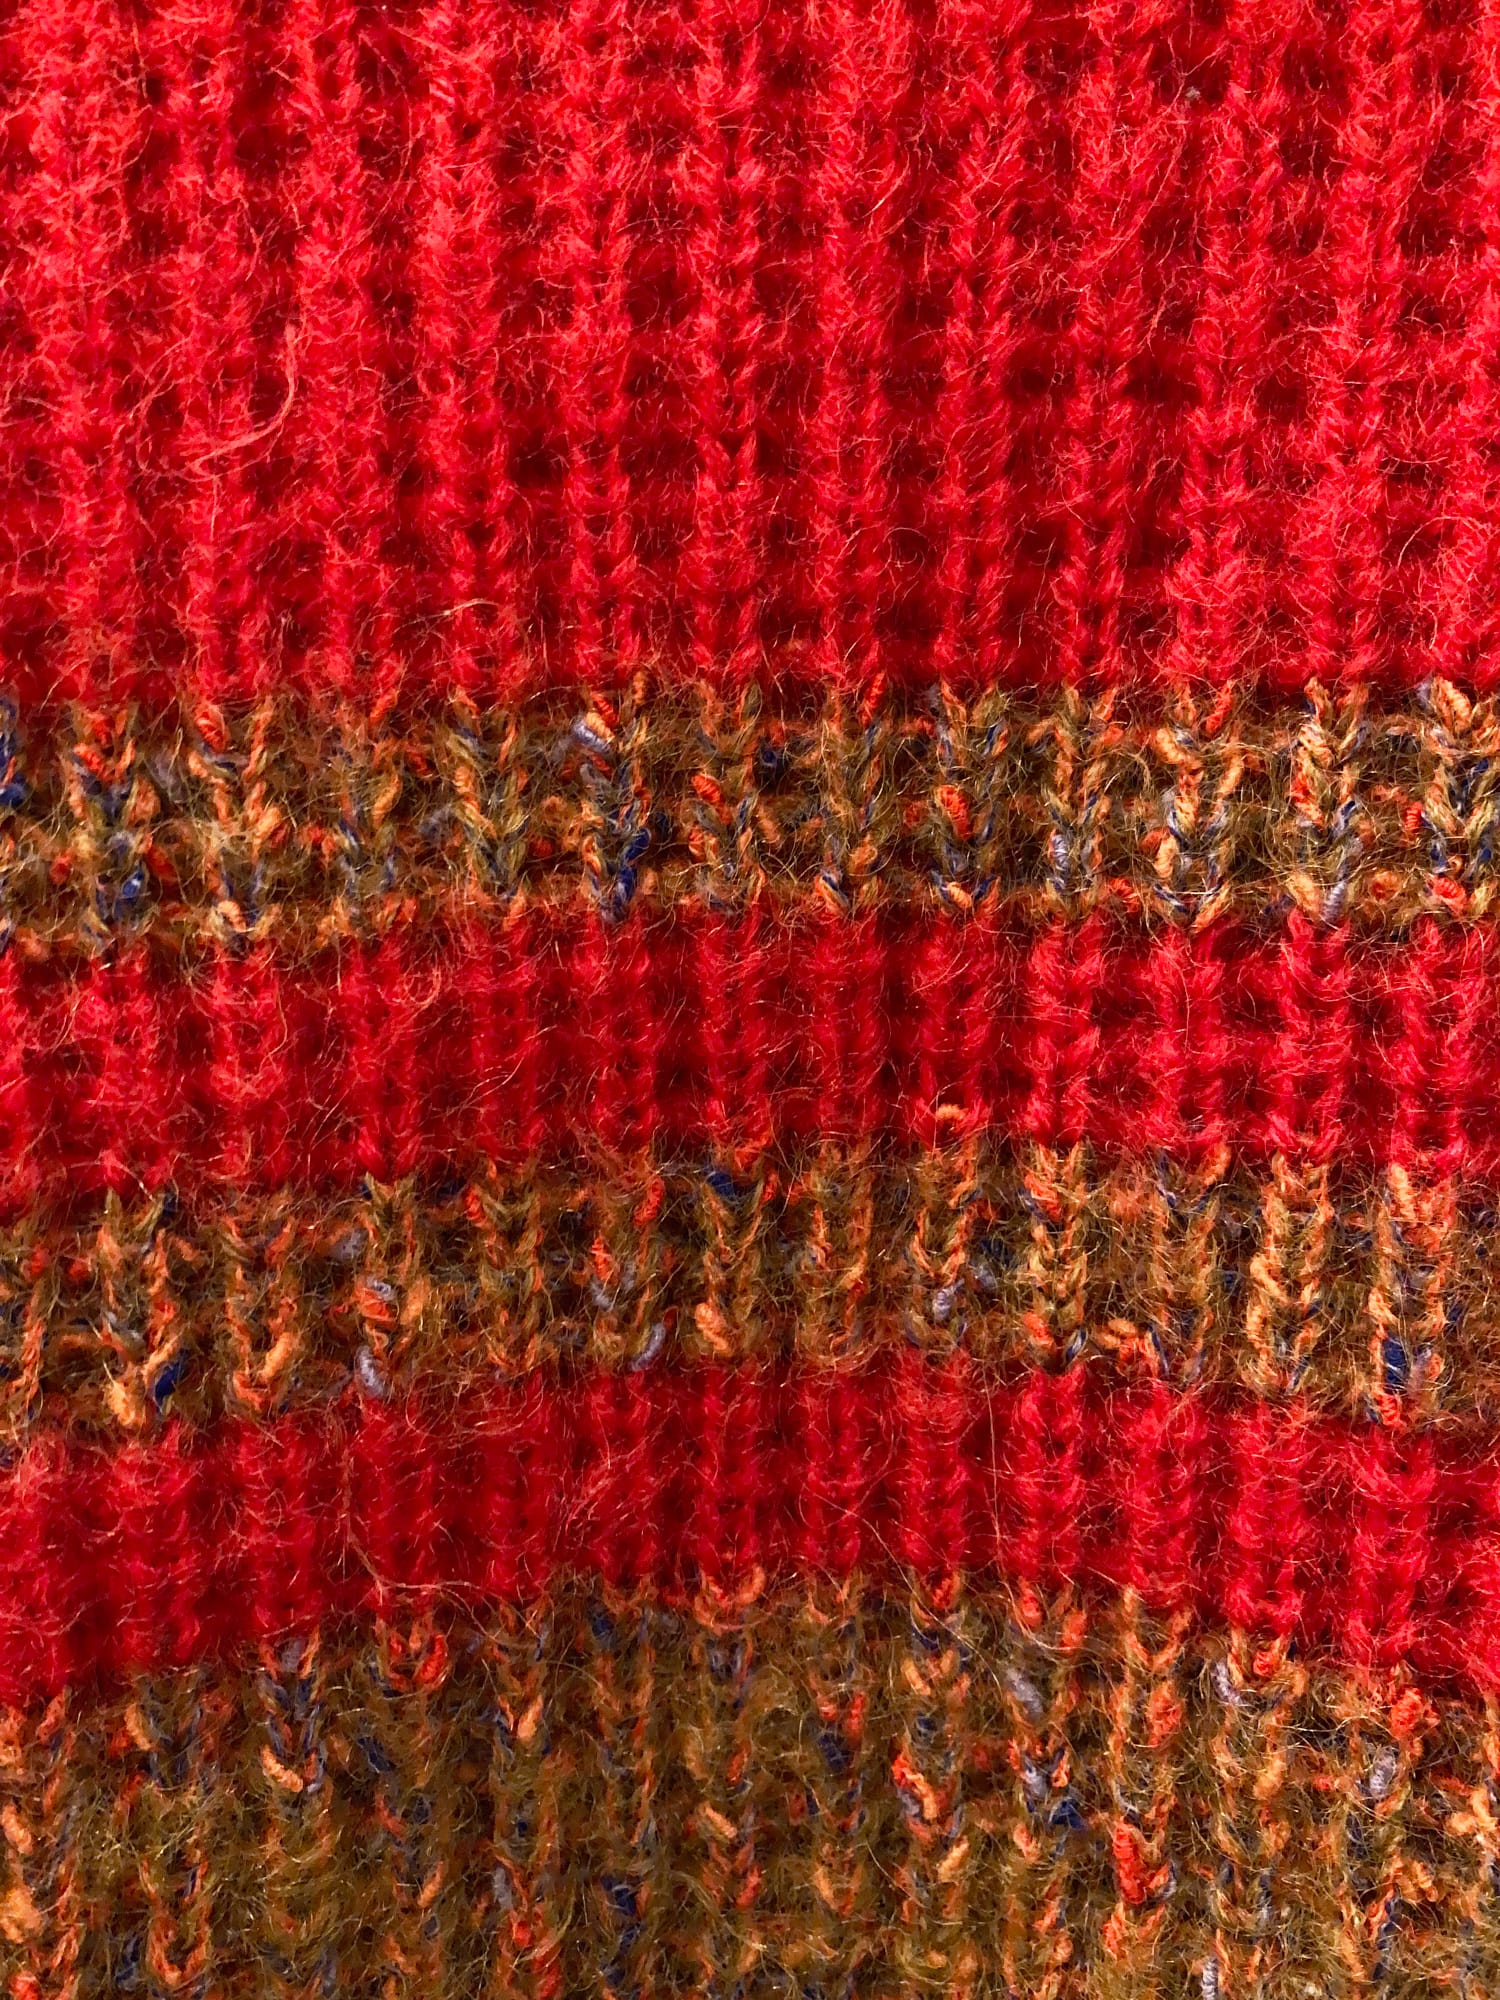 Kansai Yamamoto 1980s brown and red striped wool rib knit jumper